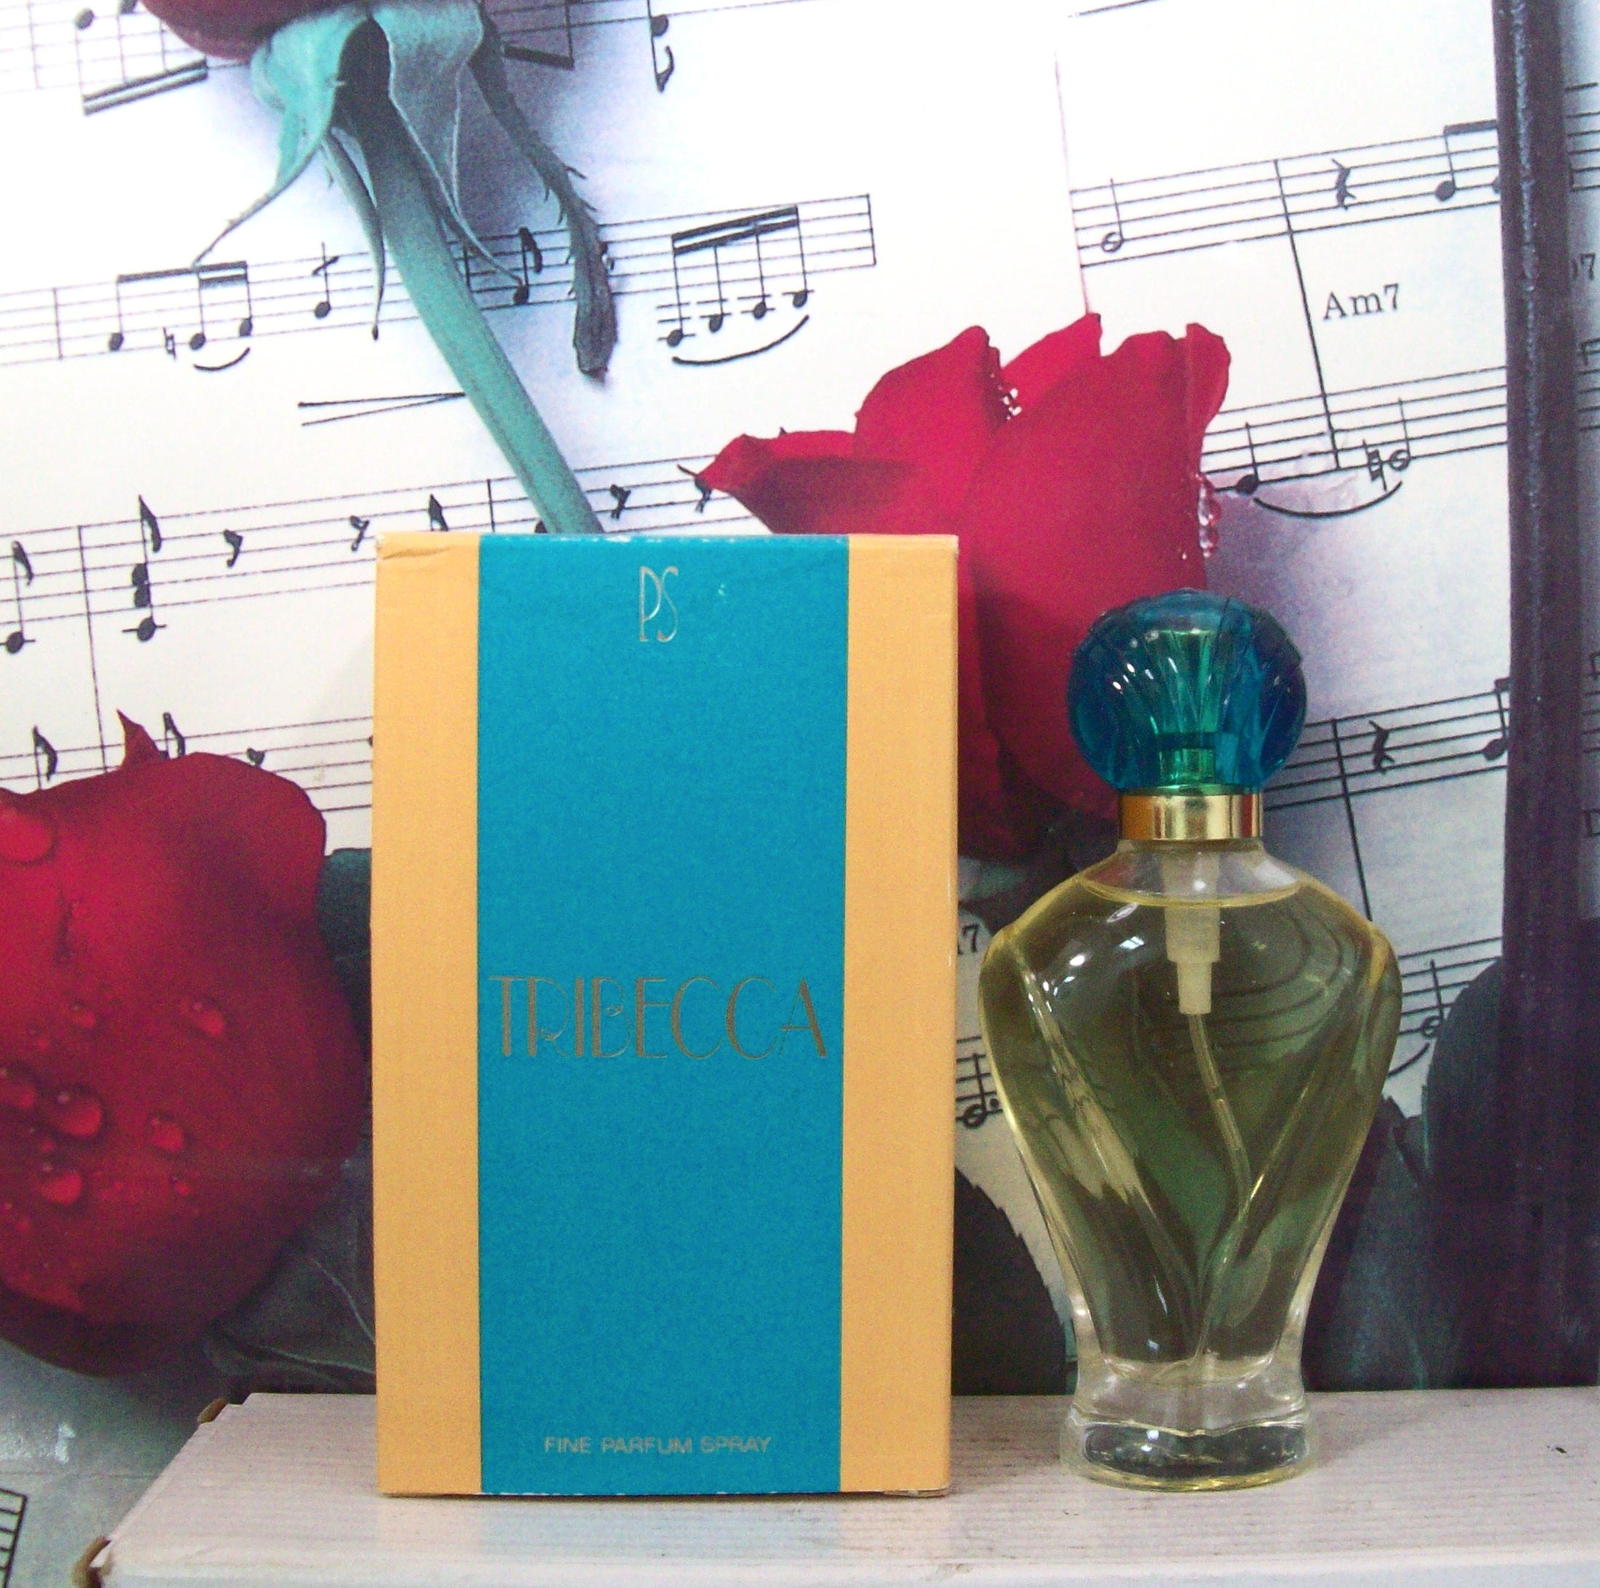 Paul Sebastian Tribecca Fine Parfum Spray 1.7 FL. OZ.  - $59.99